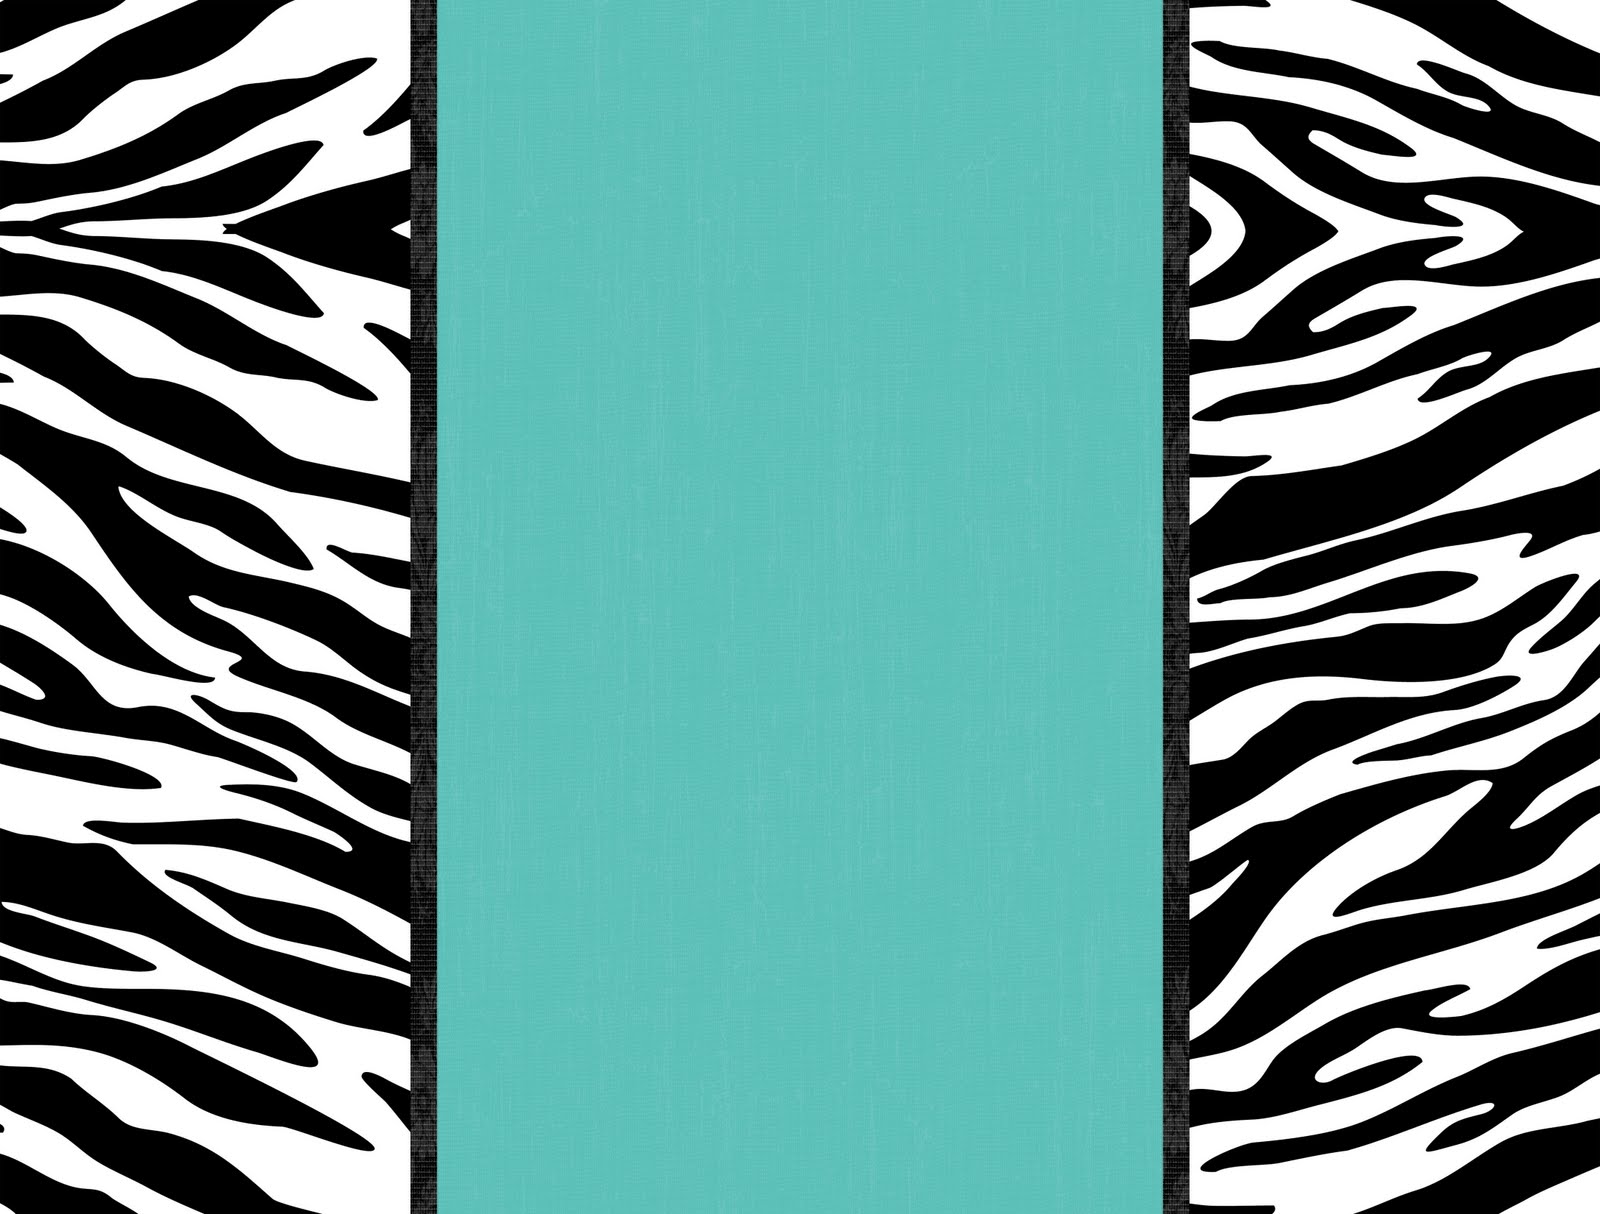 Zebra Background | Free Download Clip Art | Free Clip Art | on ...